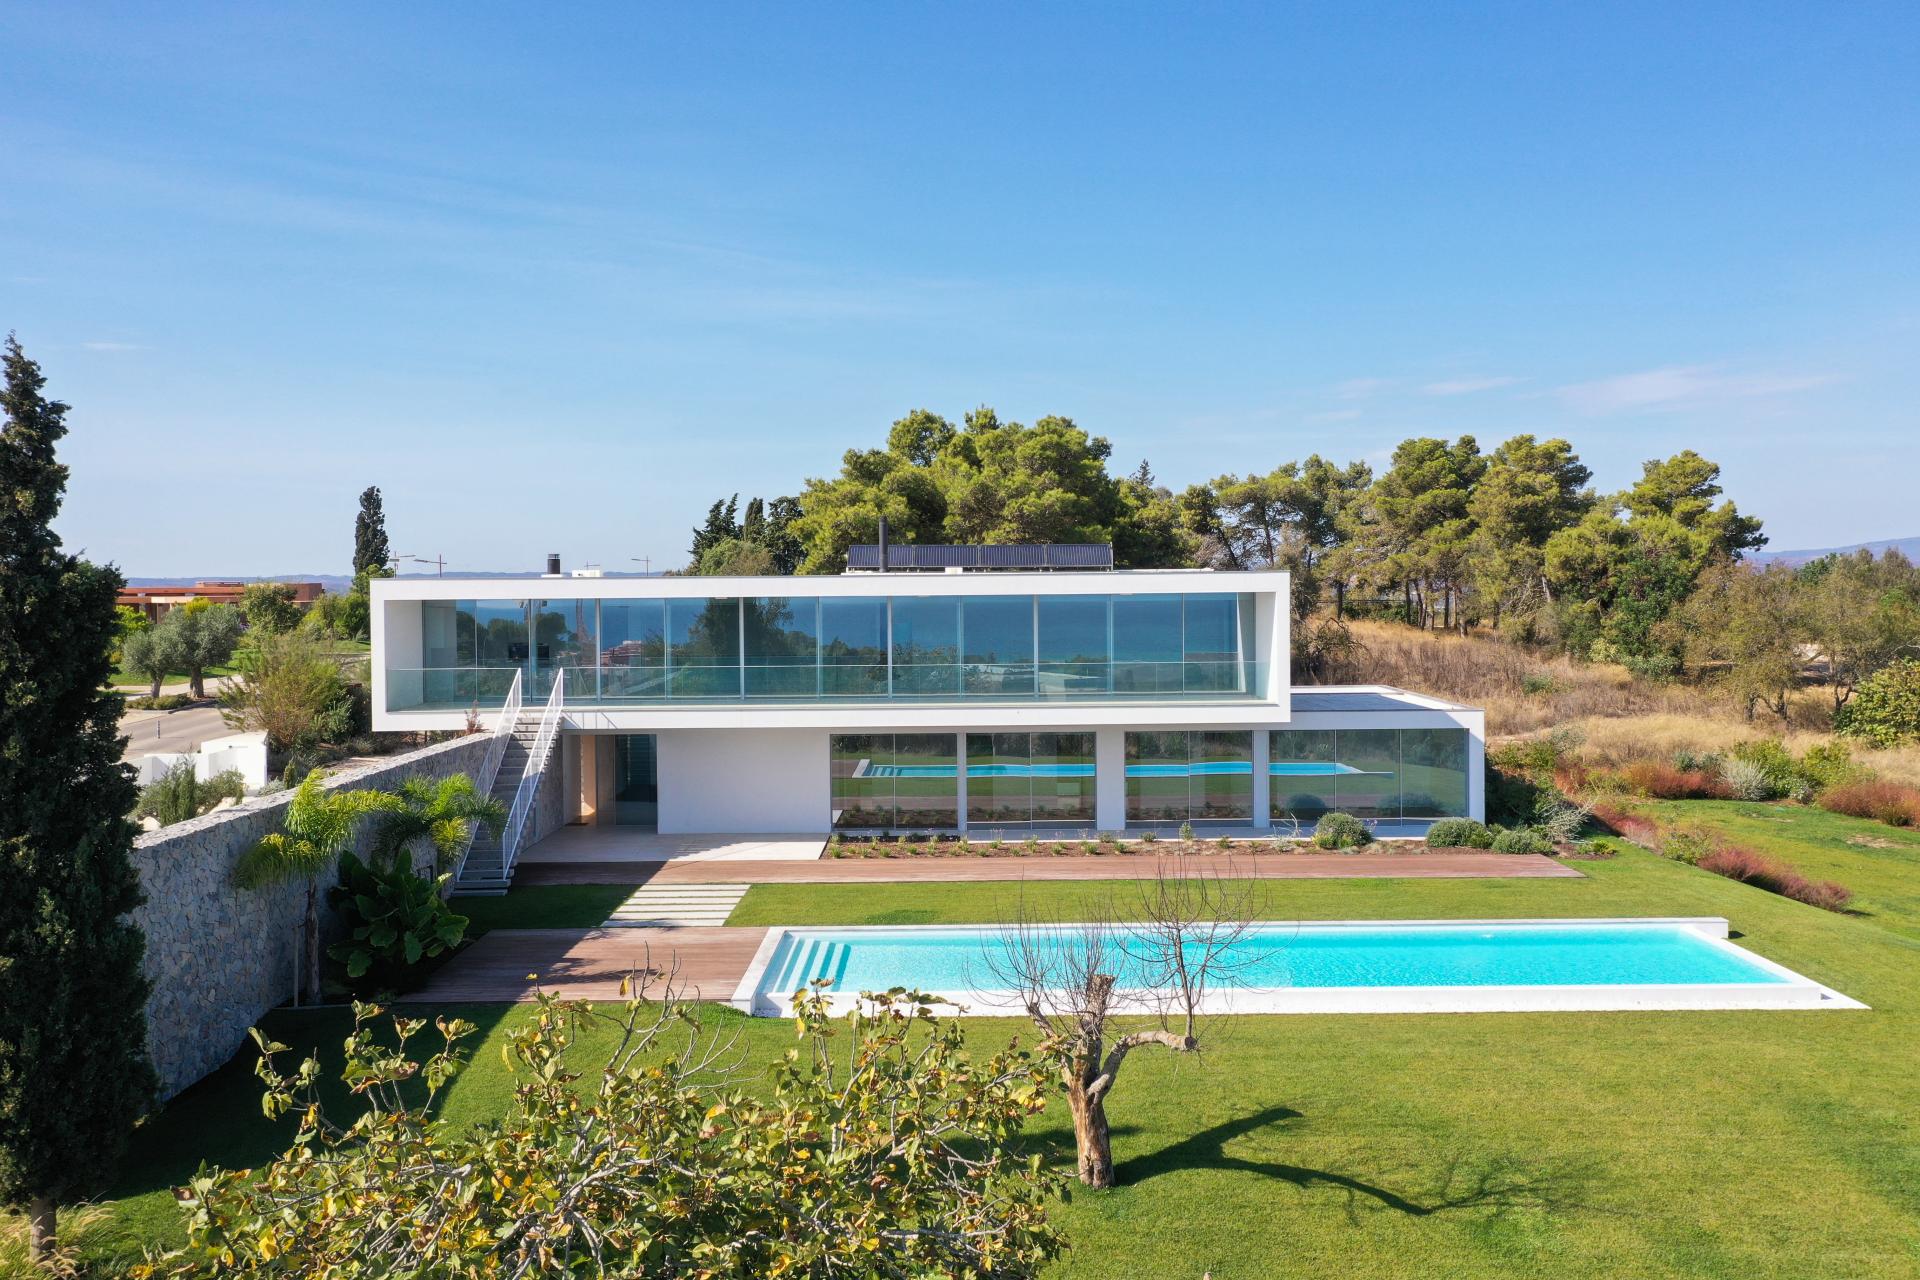 5 Bedroom Villa For Sale in Lagos, Algarve